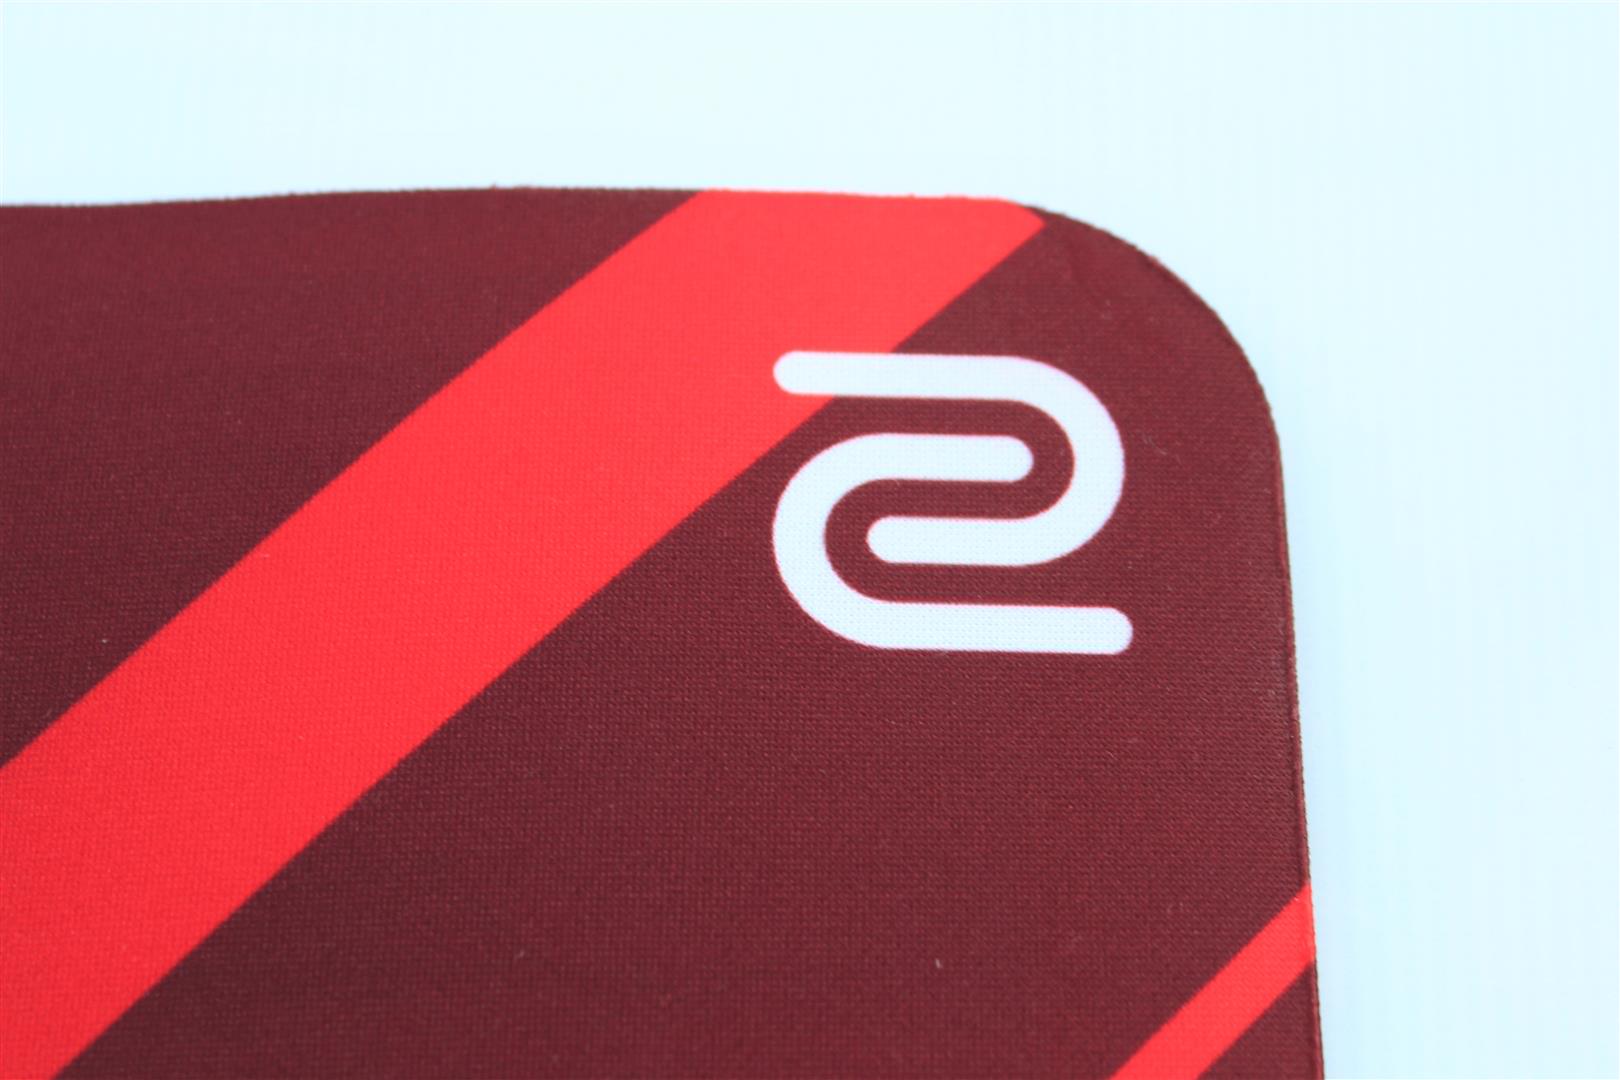 ZOWIE G-SR-SE Mouse Pad Review | REVIEWS